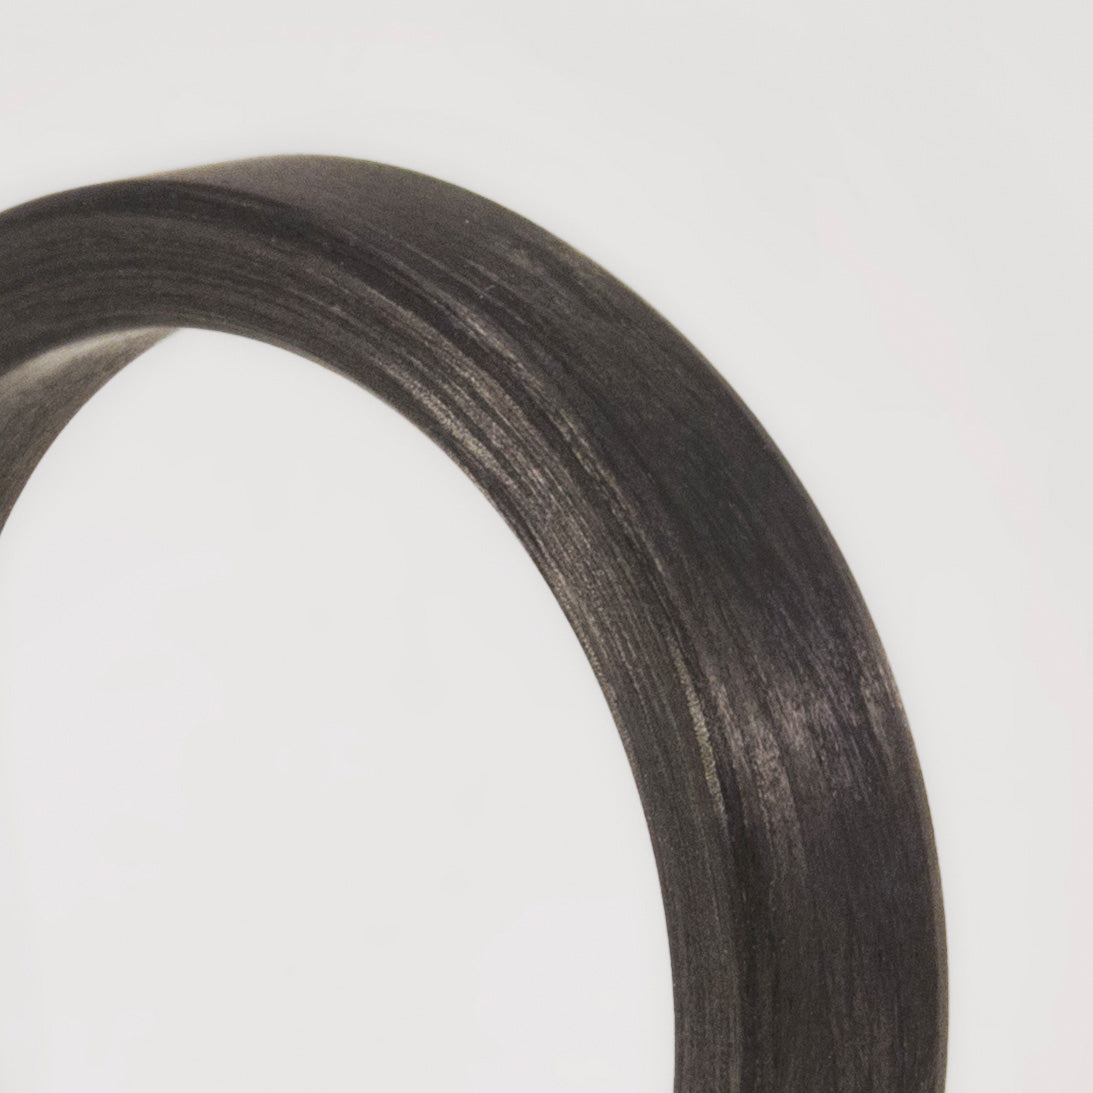 Wavy Carbon Fiber ring